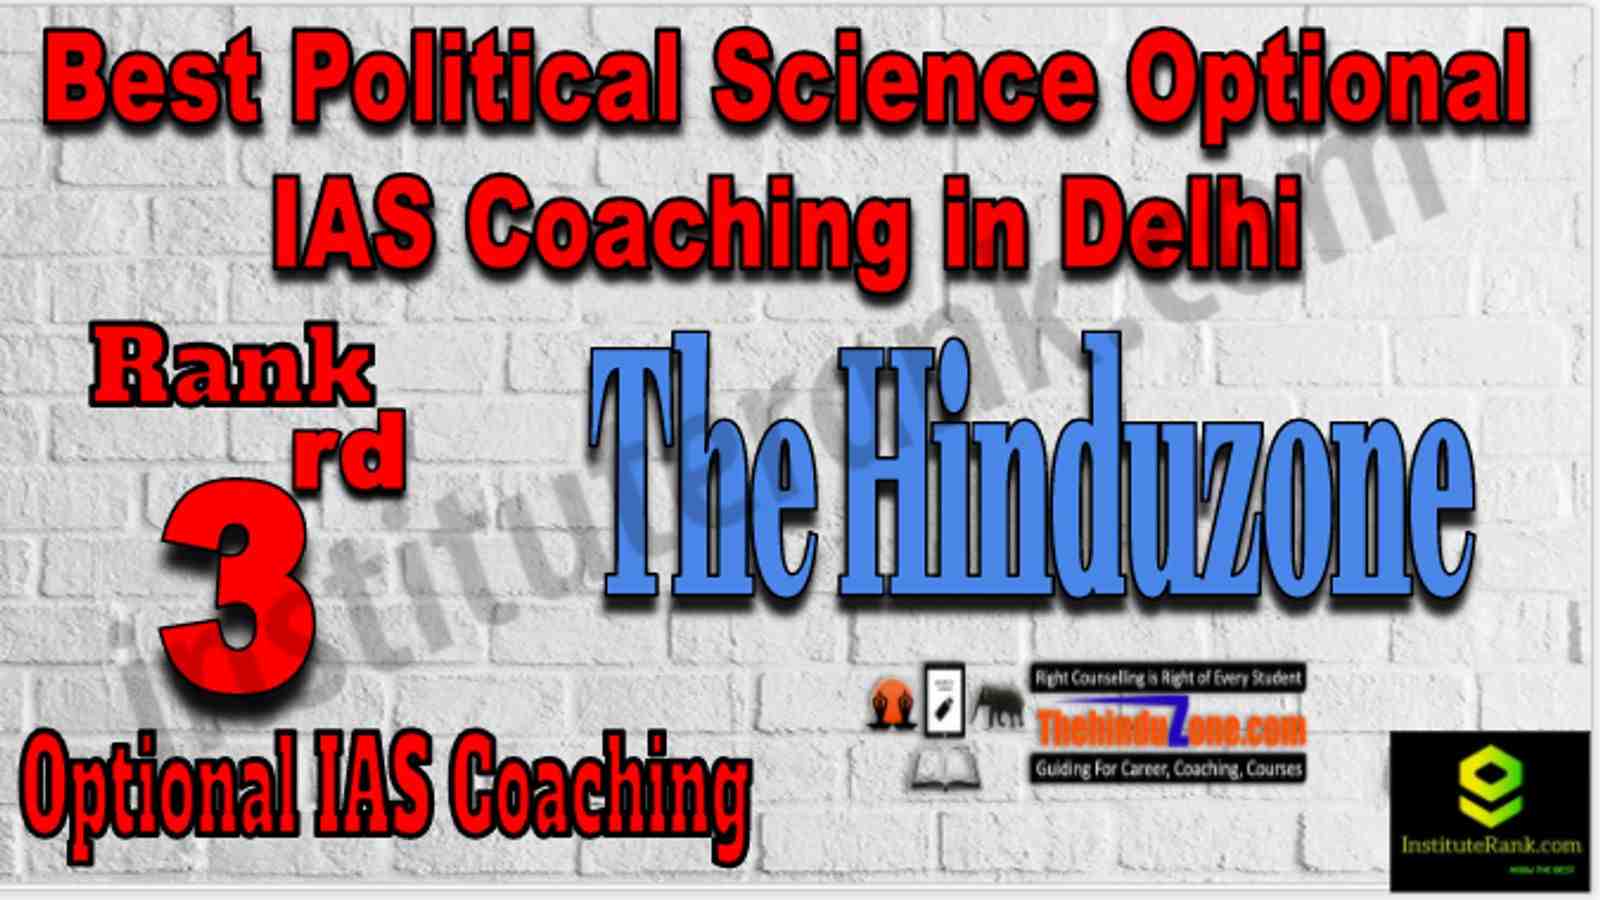 Rank 3 Best Political Science Optional IAS coachings in Delhi